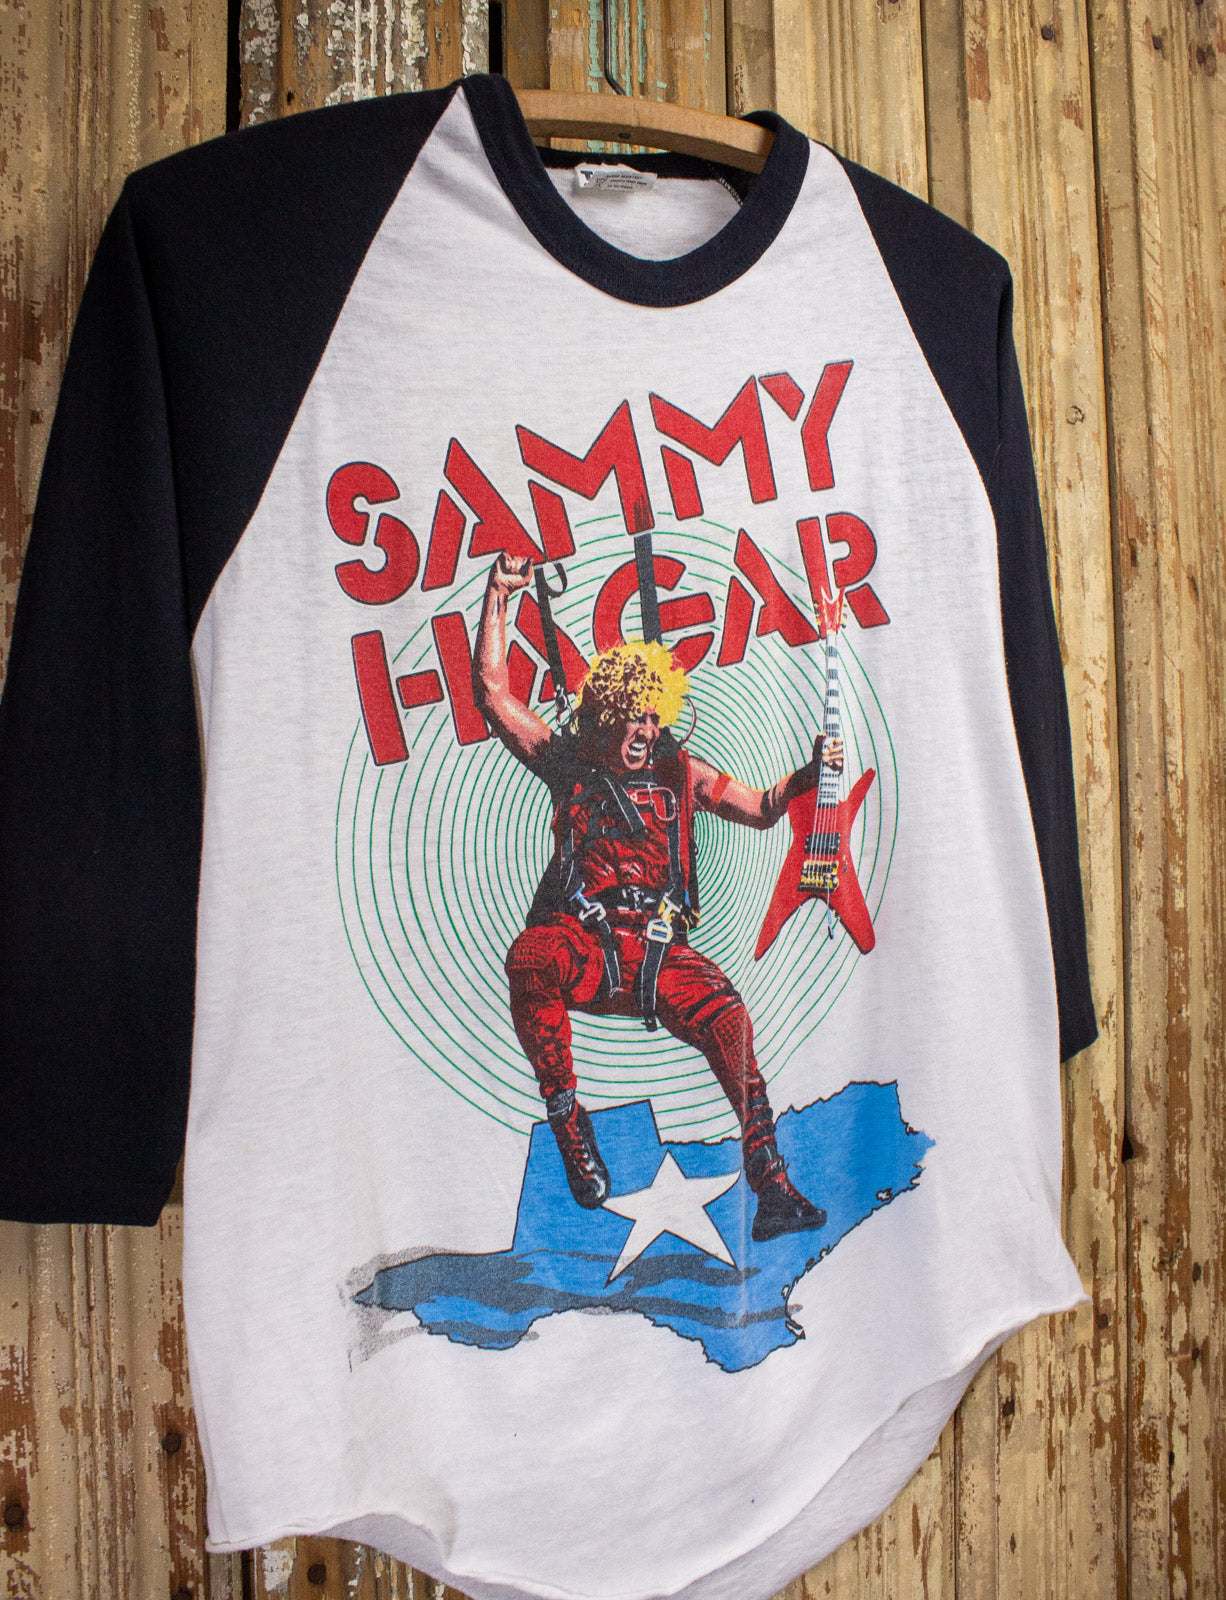 Vintage Sammy Hagar Texas Is Best Raglan Concert T Shirt 80s Small